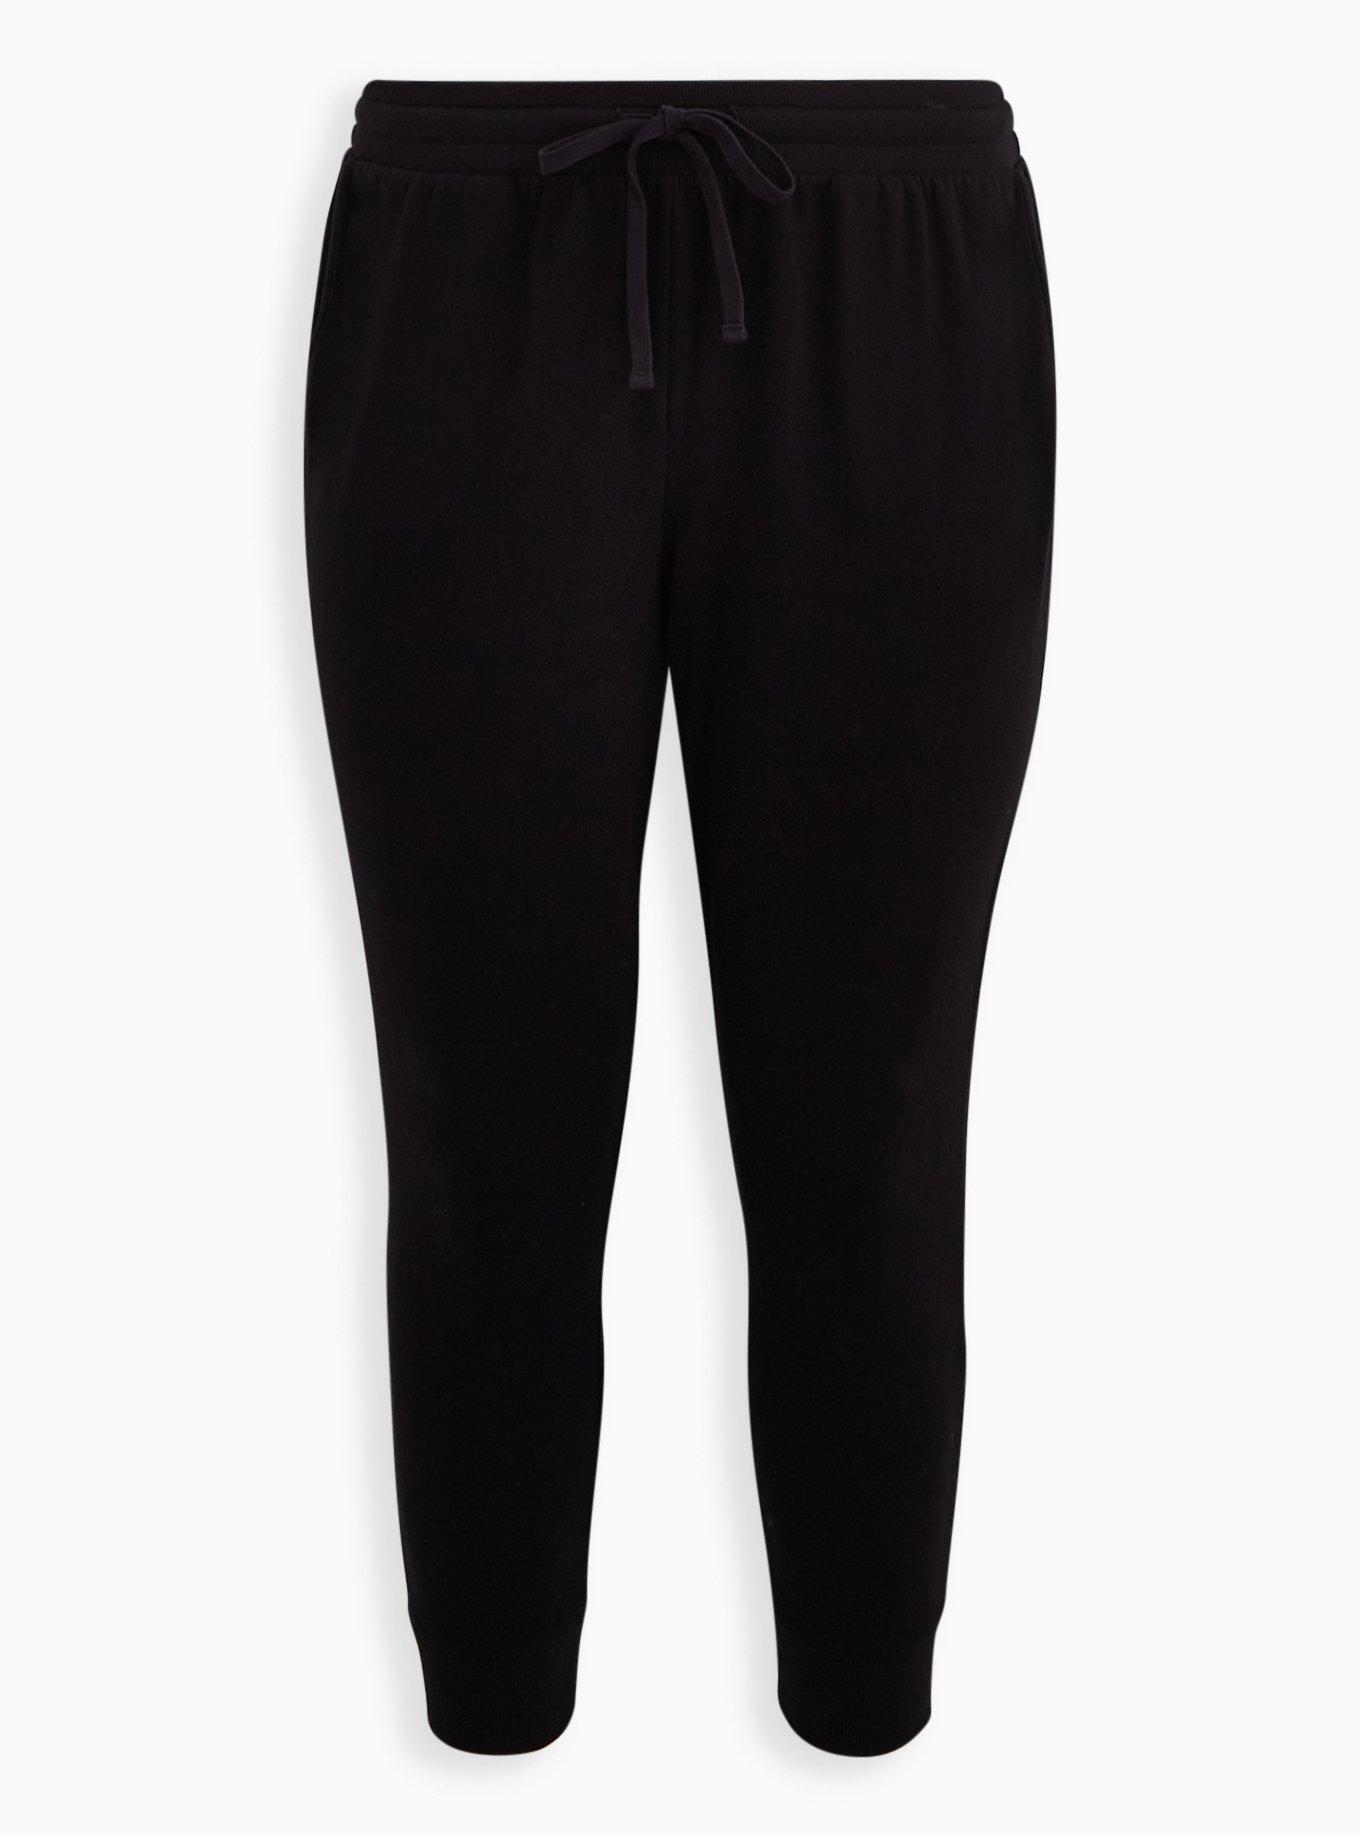 ADIDAS Womens Leggings UK 20-22 XL Black Polyester, Vintage & Second-Hand  Clothing Online